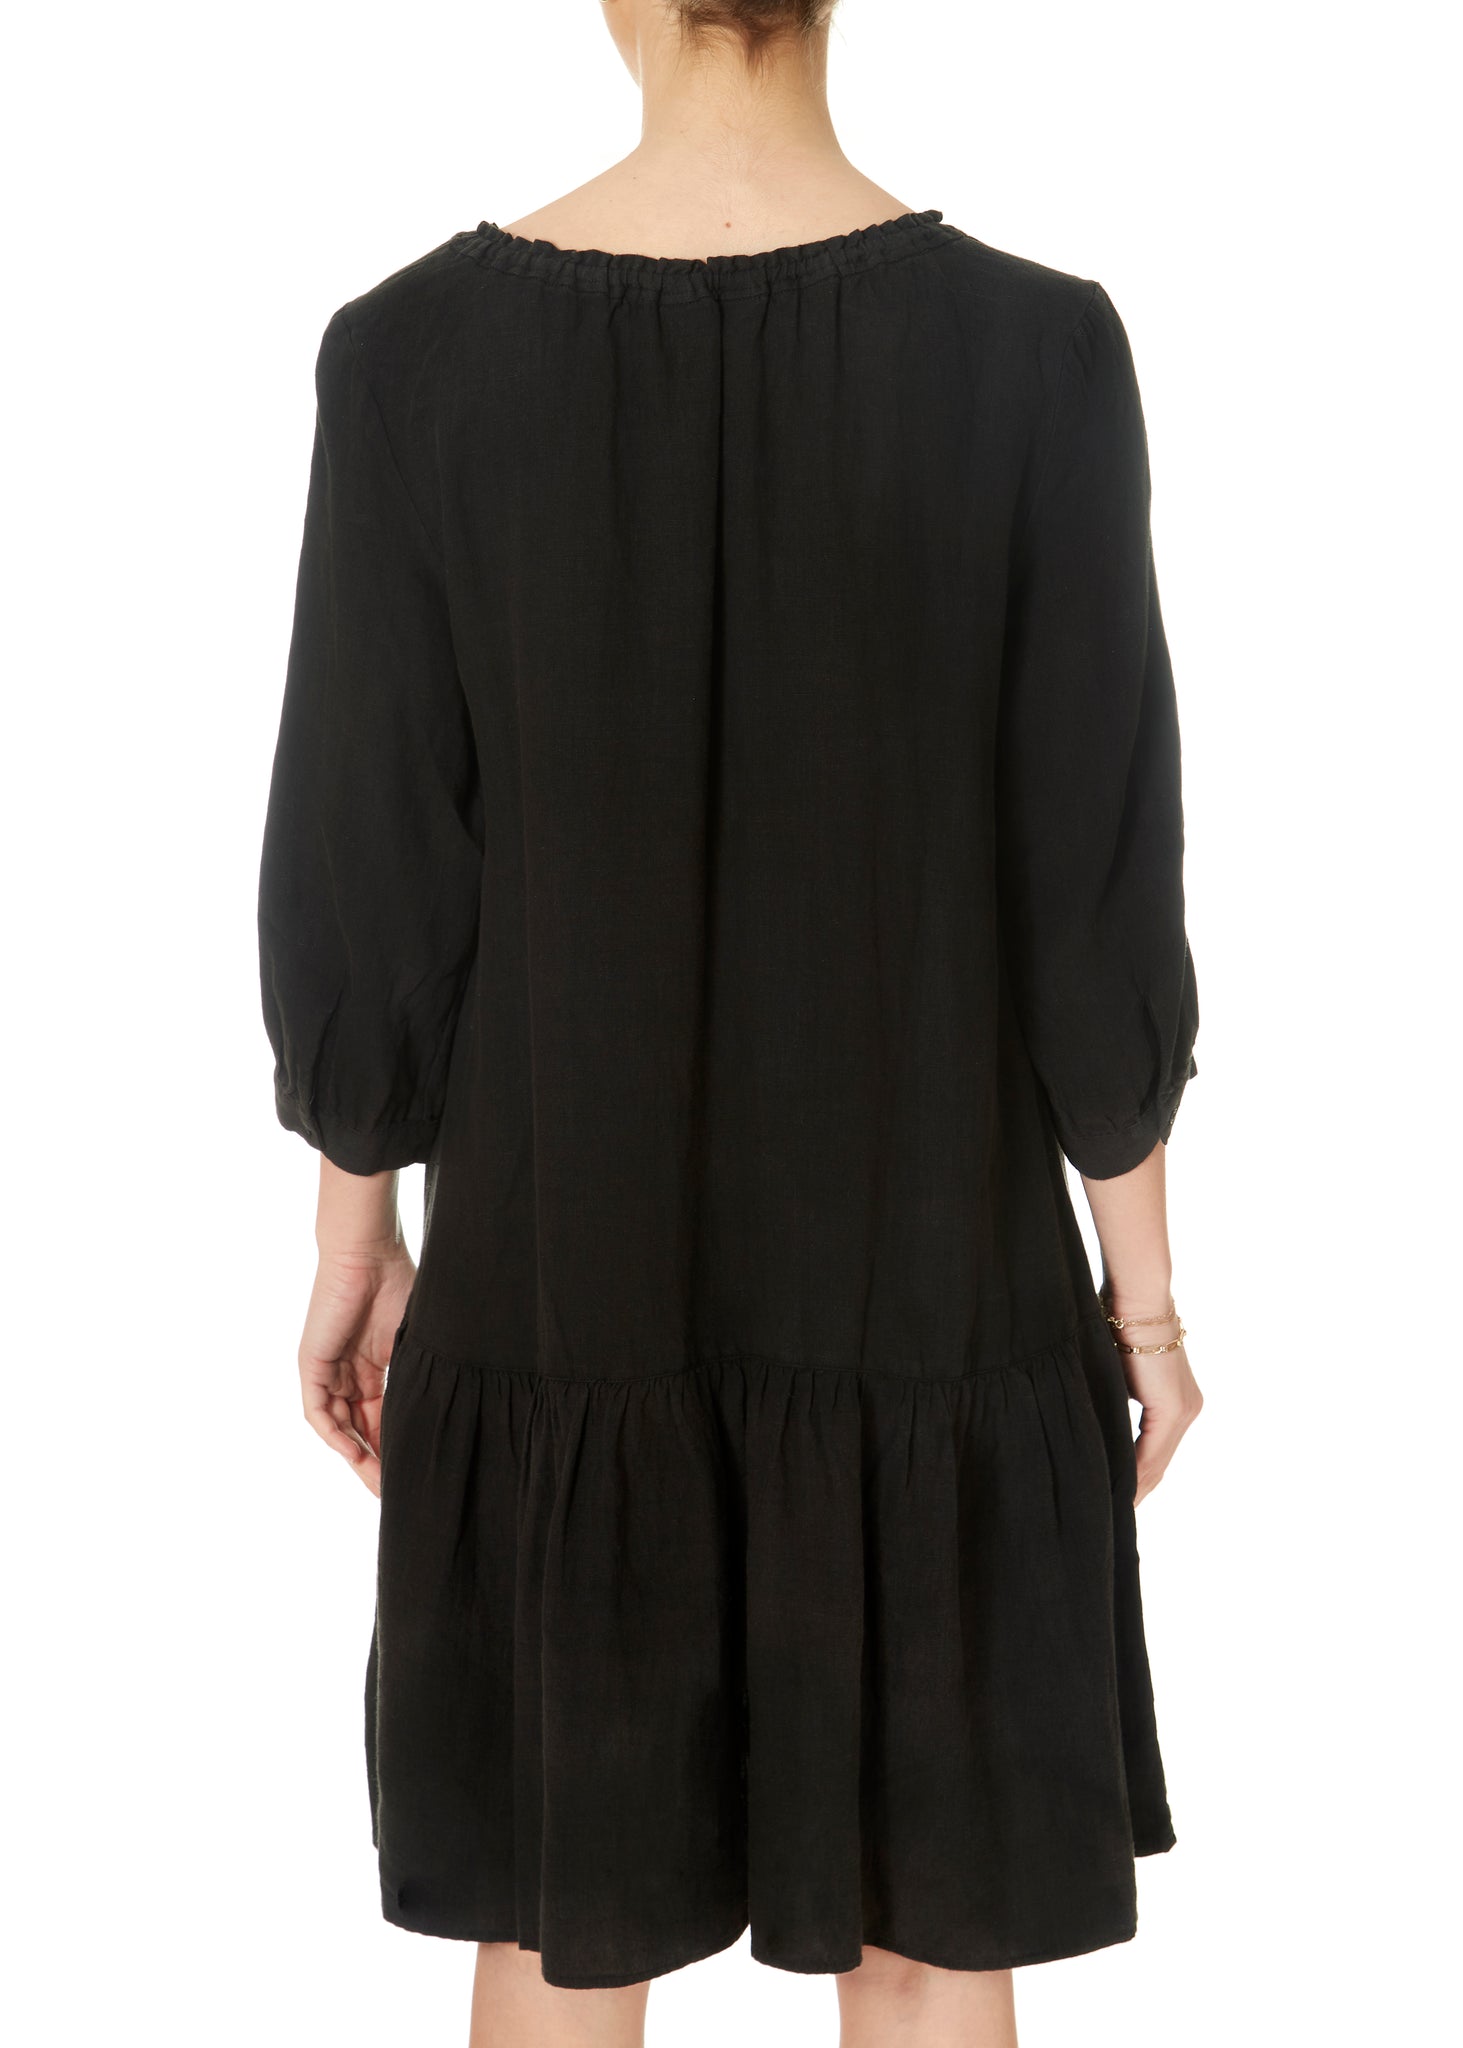 Chania Black Linen Dress